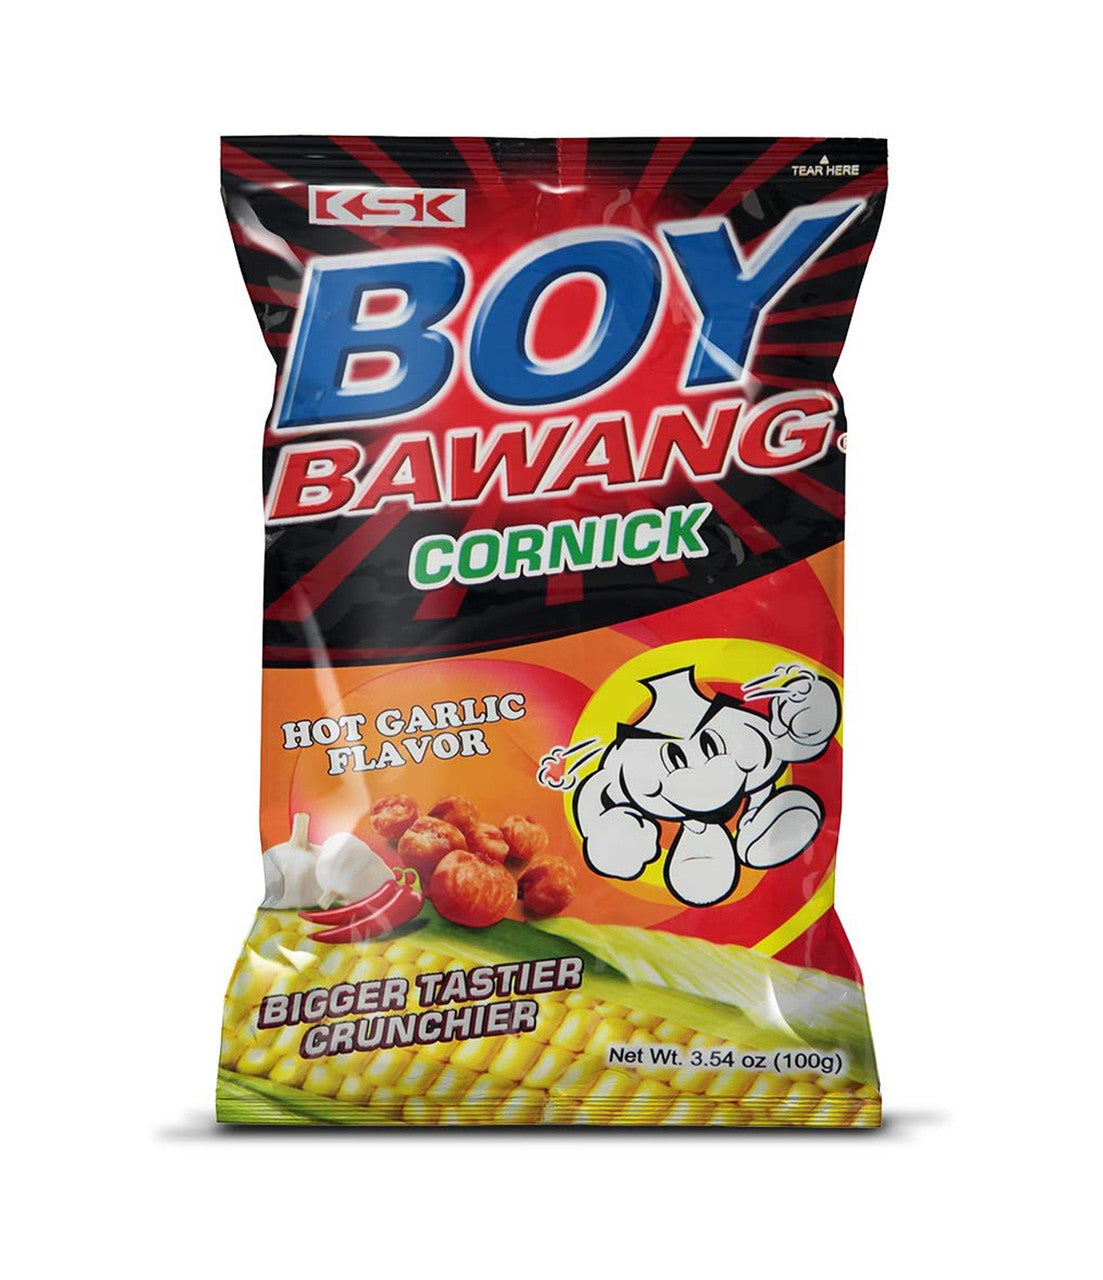 Boy Bawang Cornick Hot Garlic Flavored Fried Corn, 100g/3.5 oz. Bag {Imported from Canada}